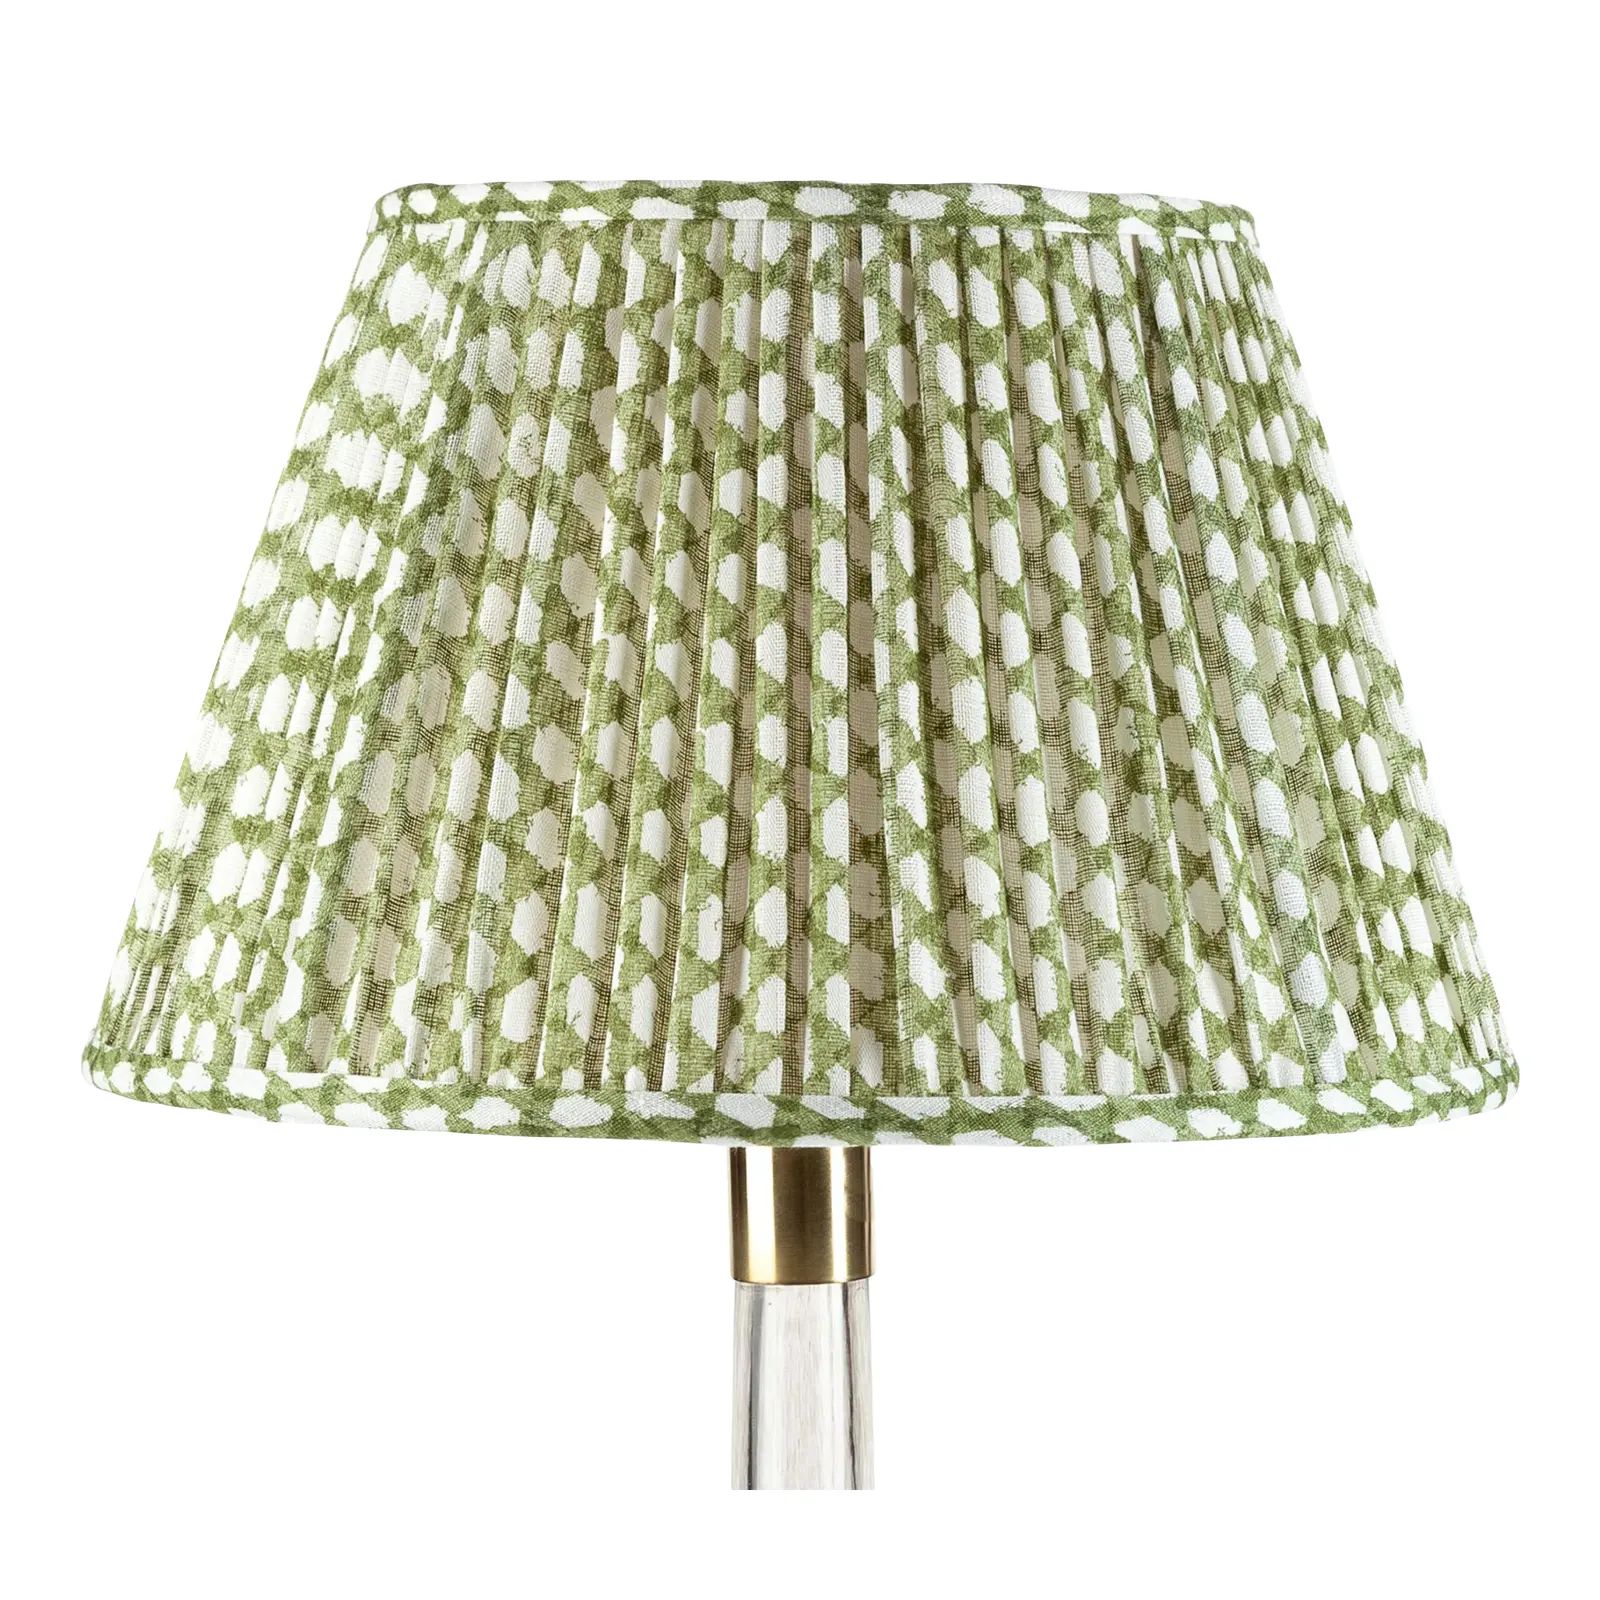 Fermoie Gathered Linen Lampshade in Green Wicker, 16 Inch | Chairish